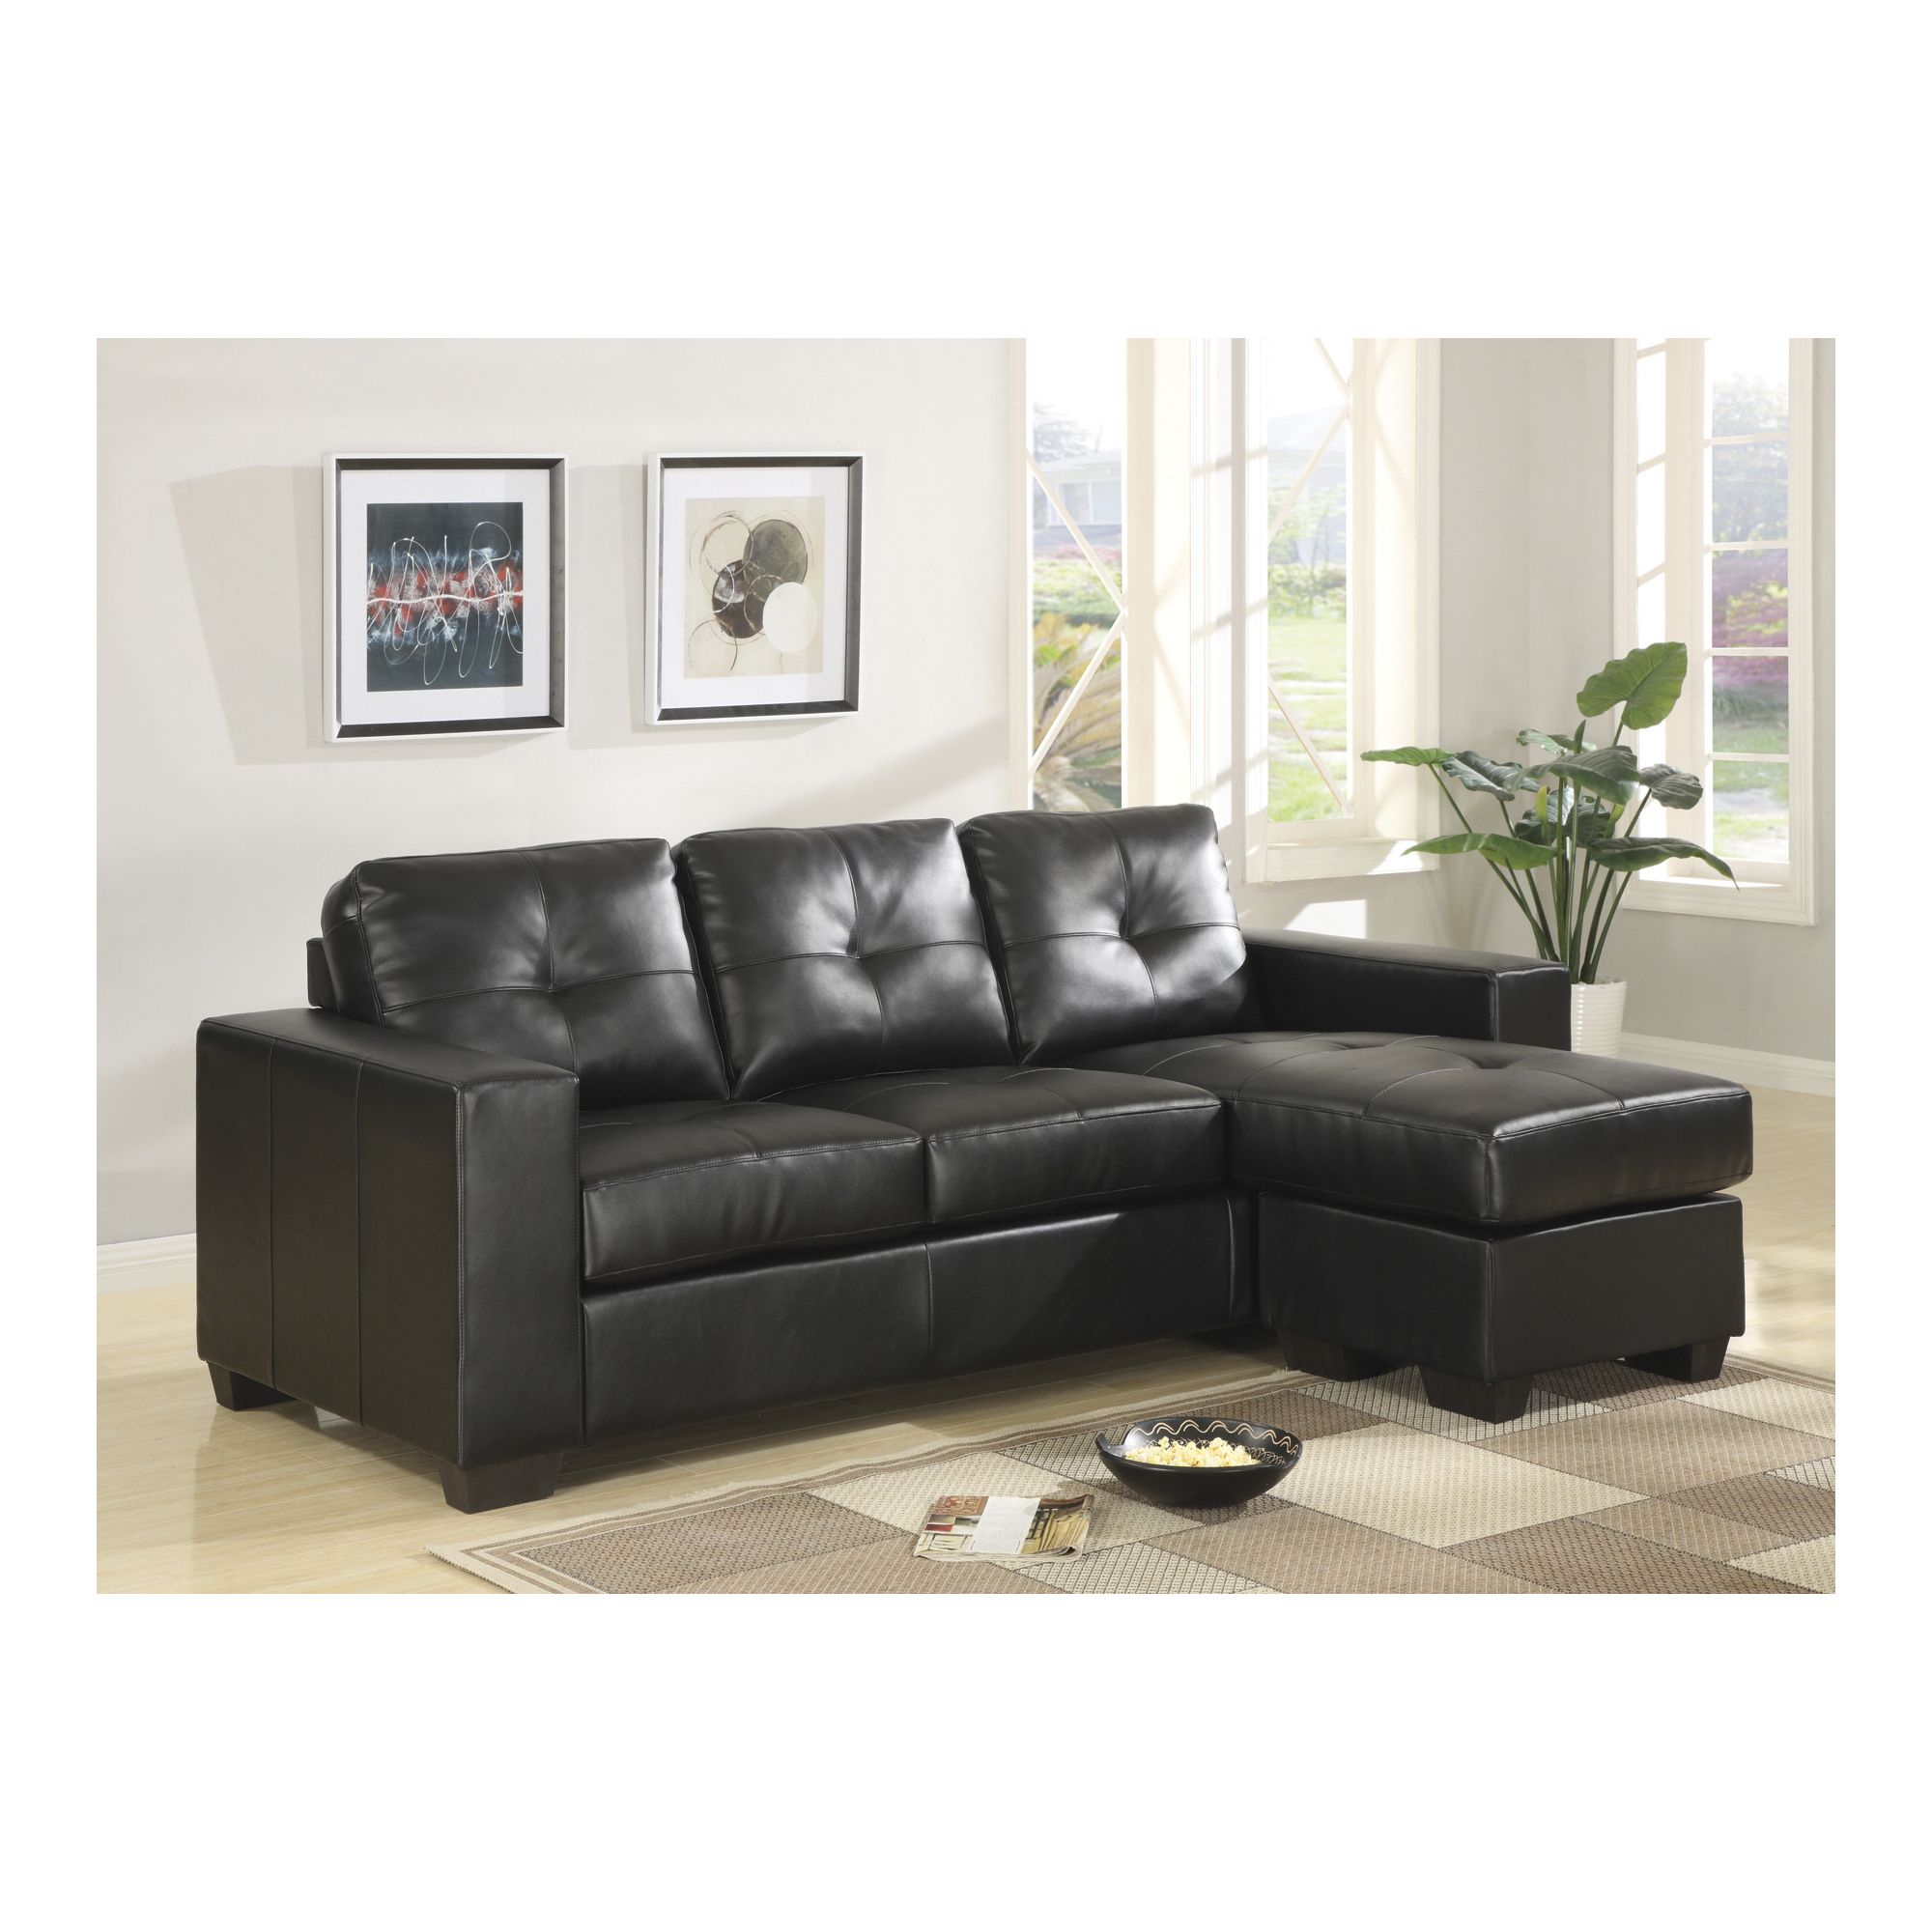 Furniture Link Gemona L Sofa in Black at Tesco Direct